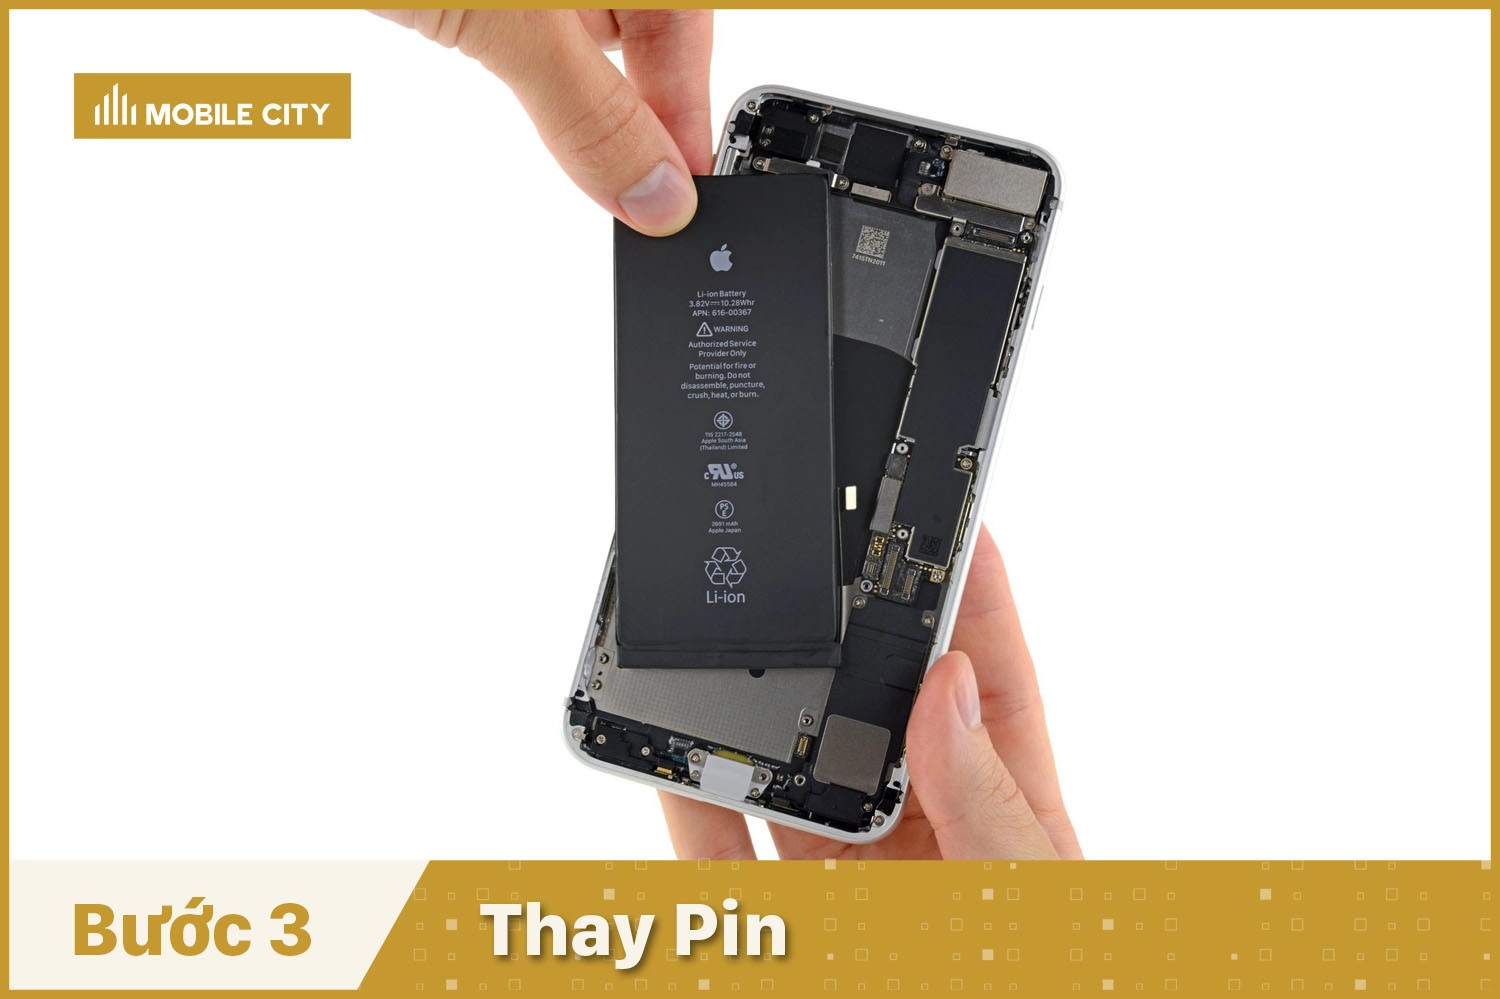 Thay Pin cho iPhone 8 Plus